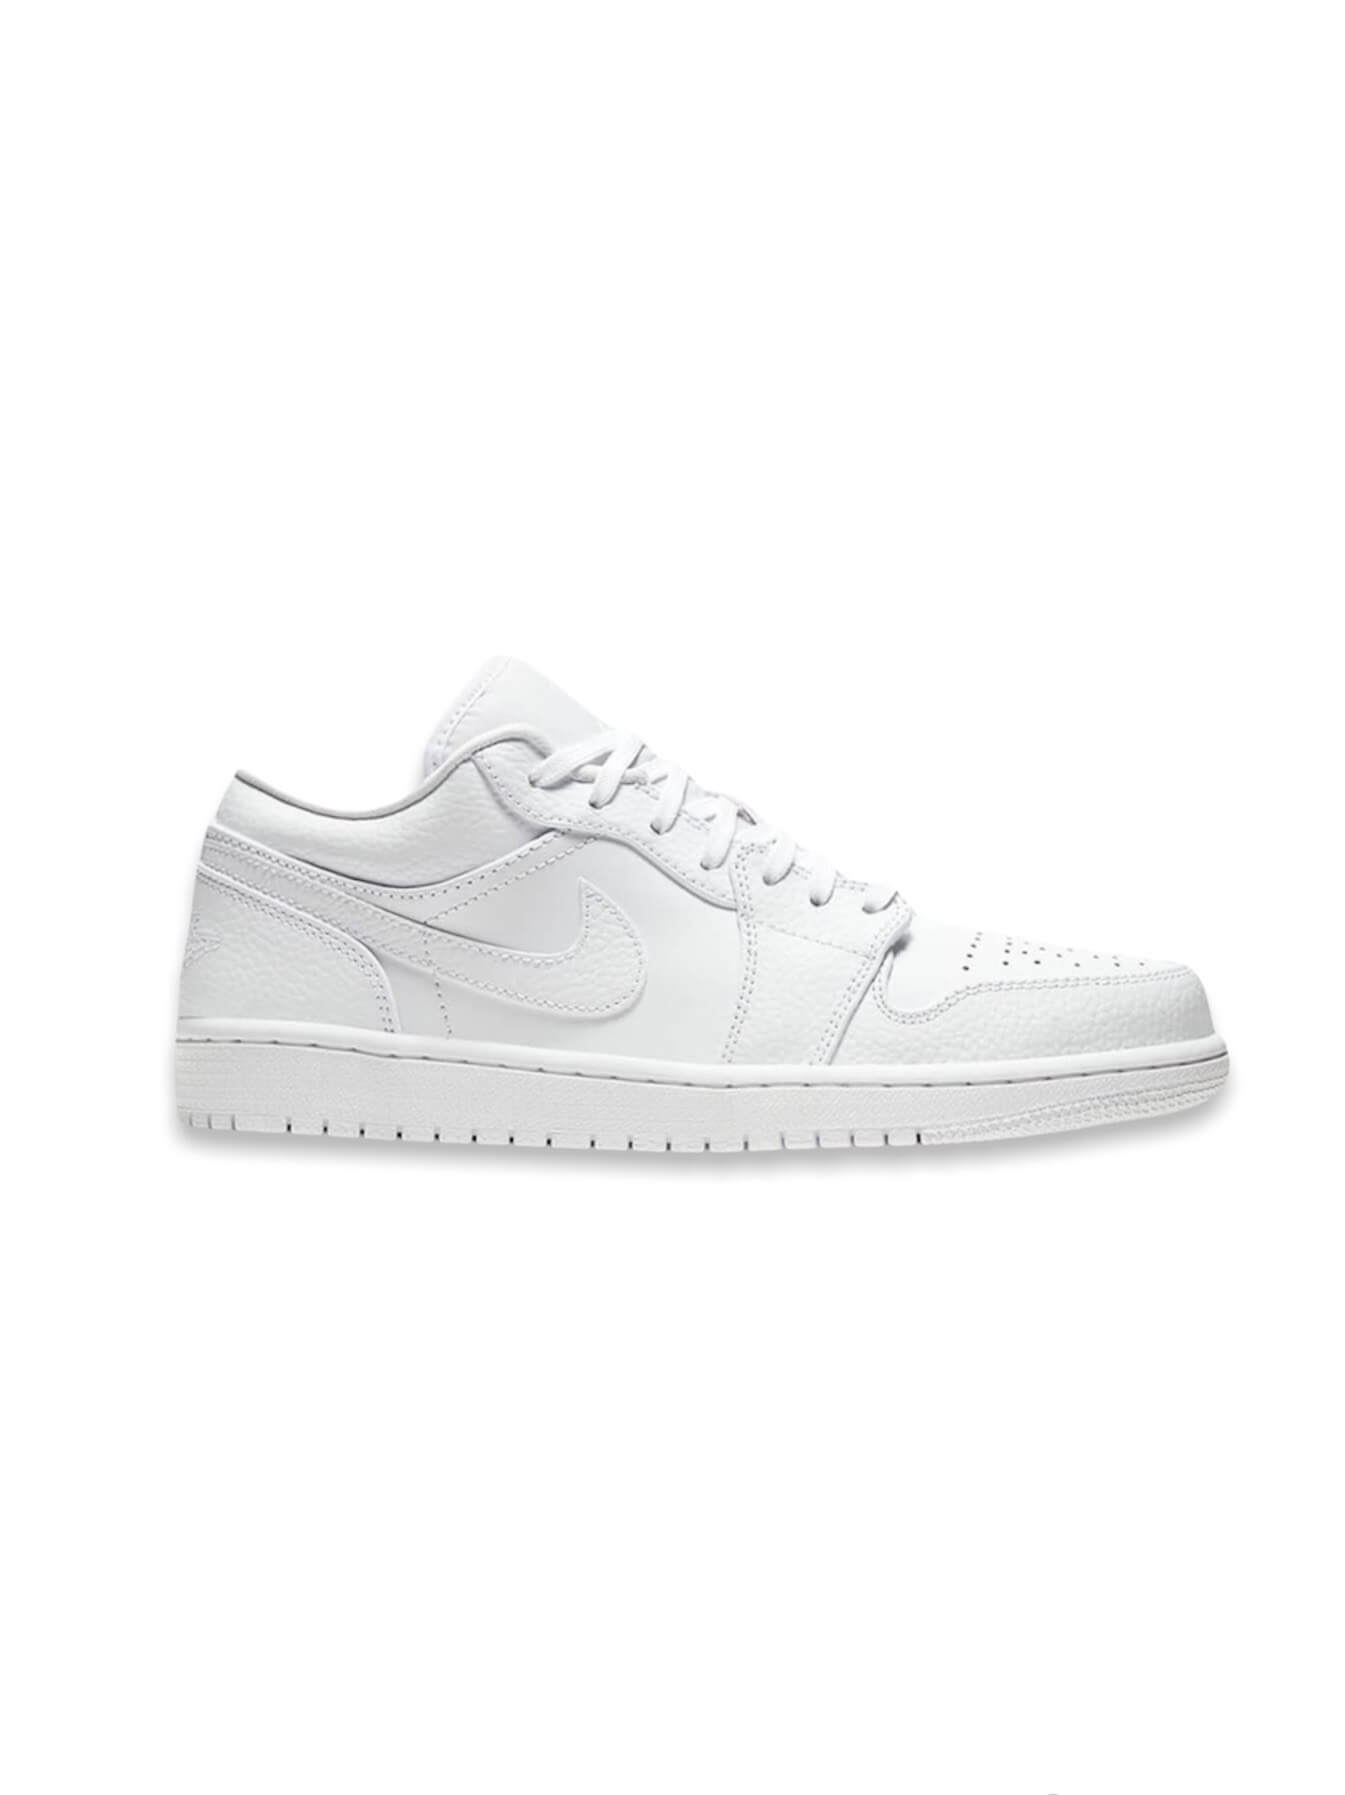 Jordan Trắng Cổ Thấp - Nike Air Jordan 1 Low All White